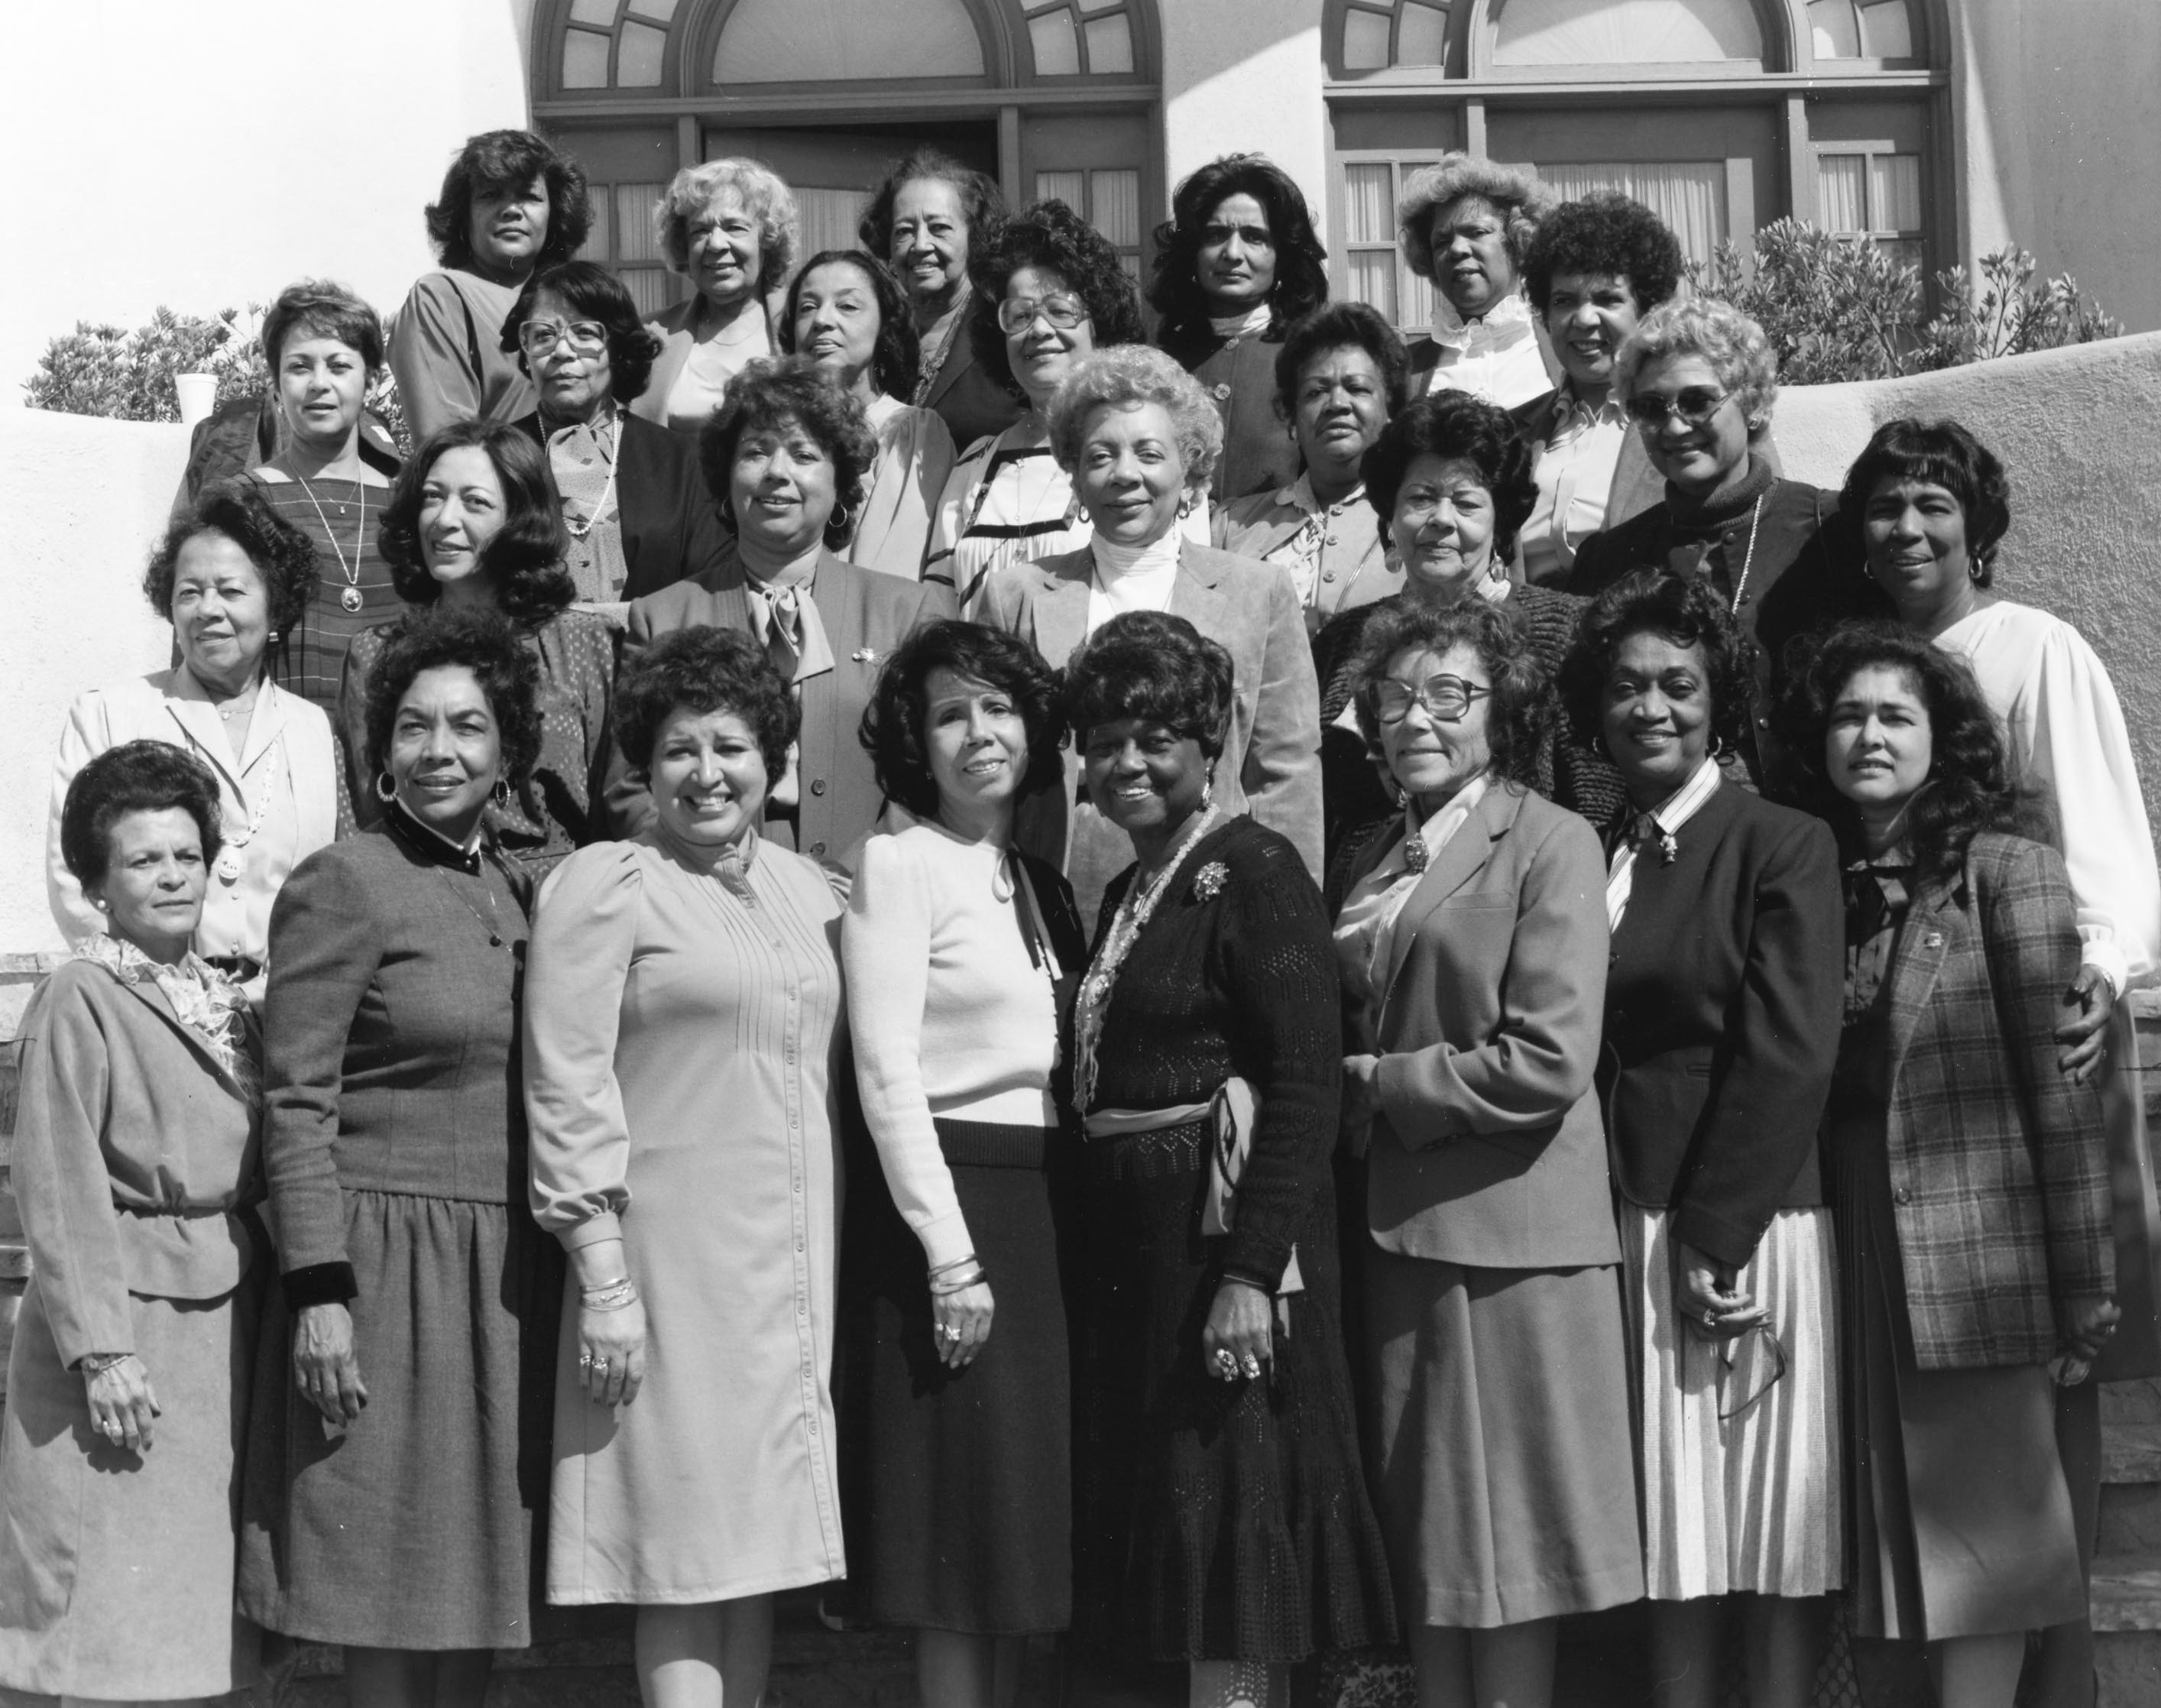 Group portrait of Black women